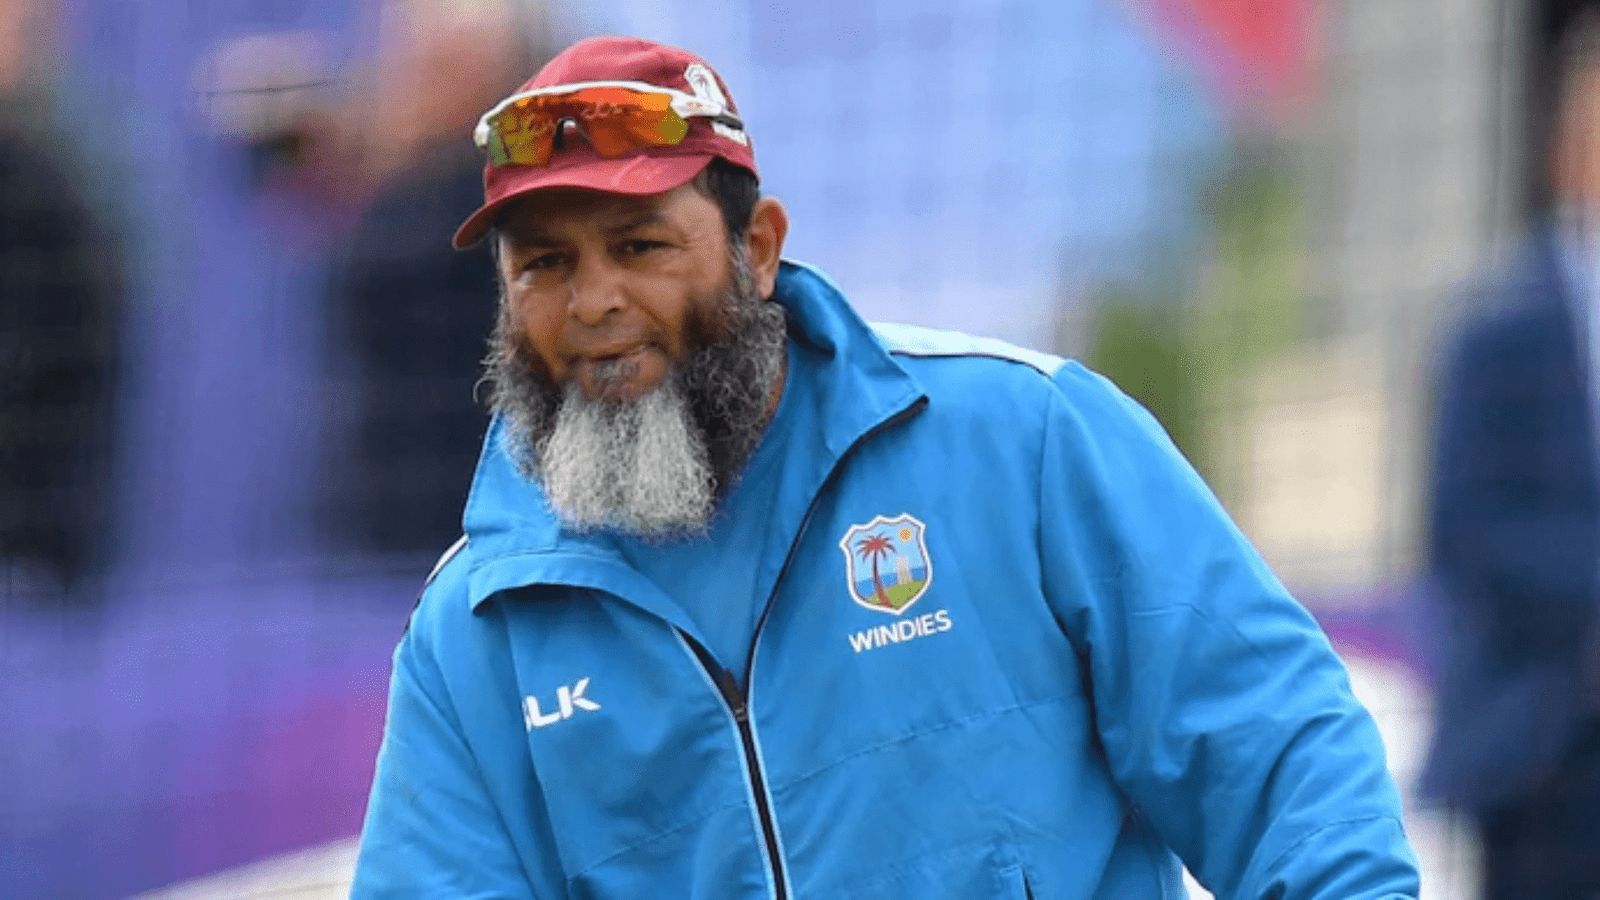 BCB Snags Cricket Legend Mushtaq Ahmed as New Spin Bowling Coach